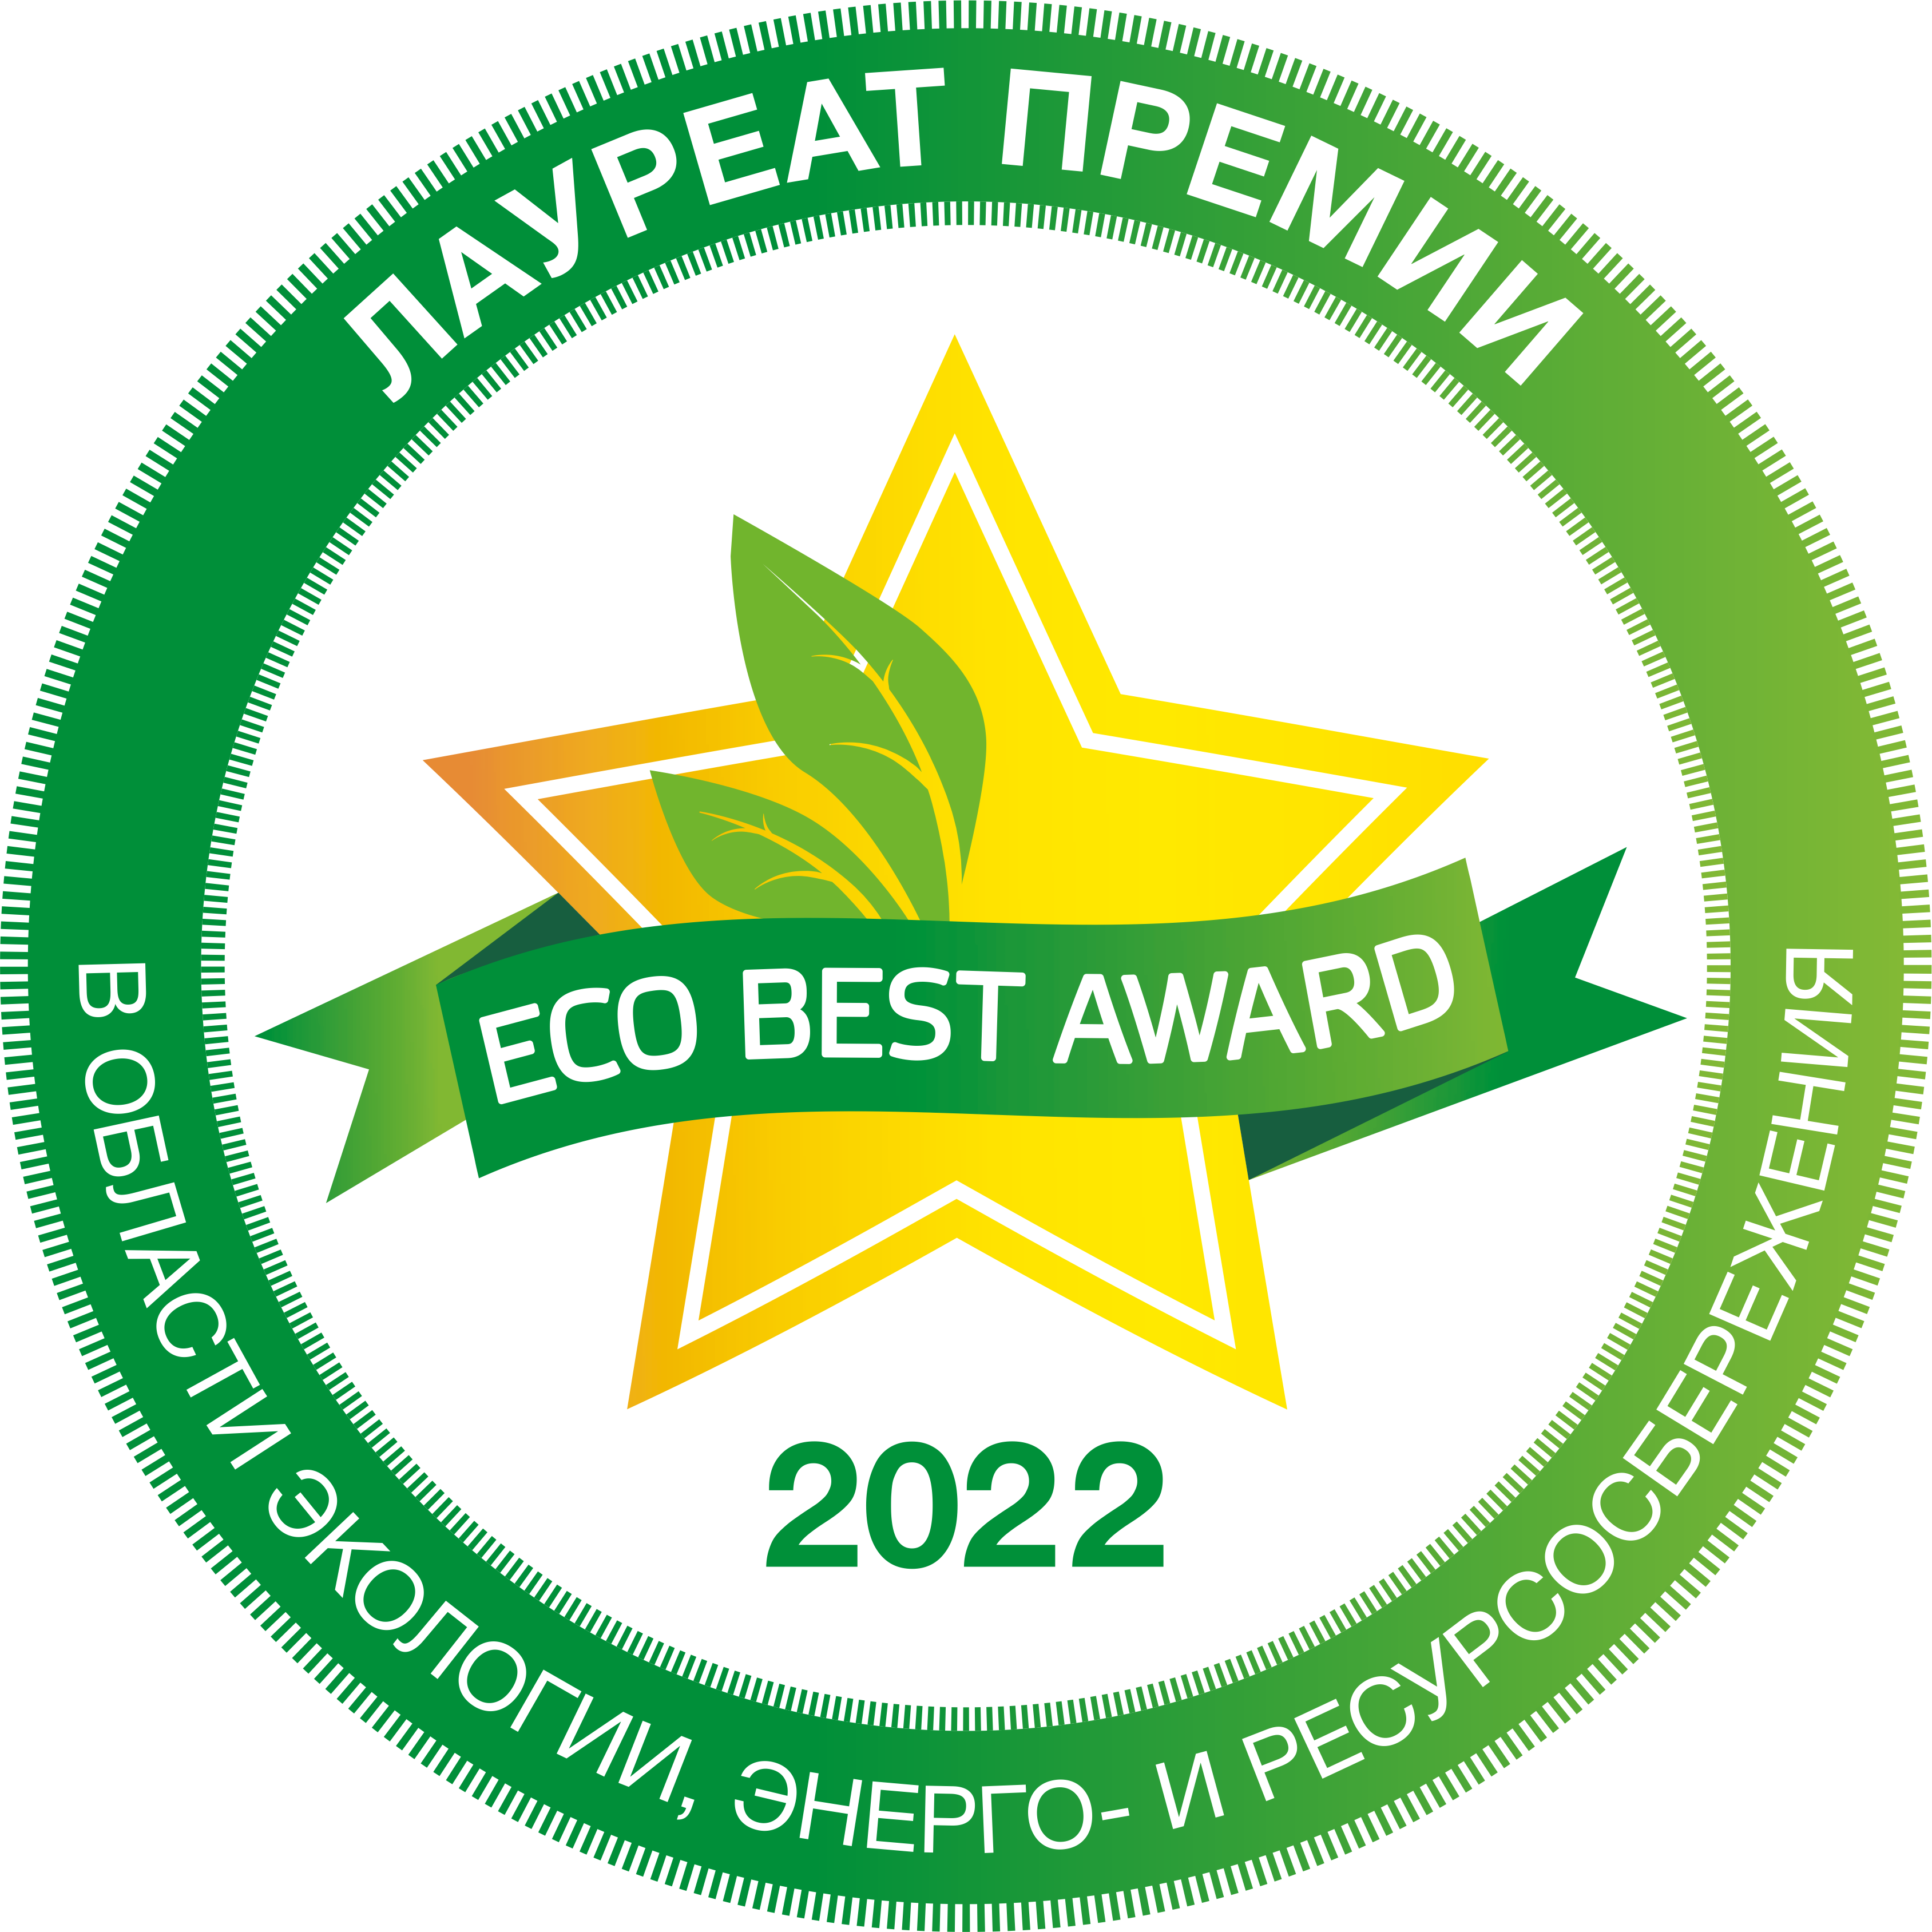 Eco Best Awards 2022